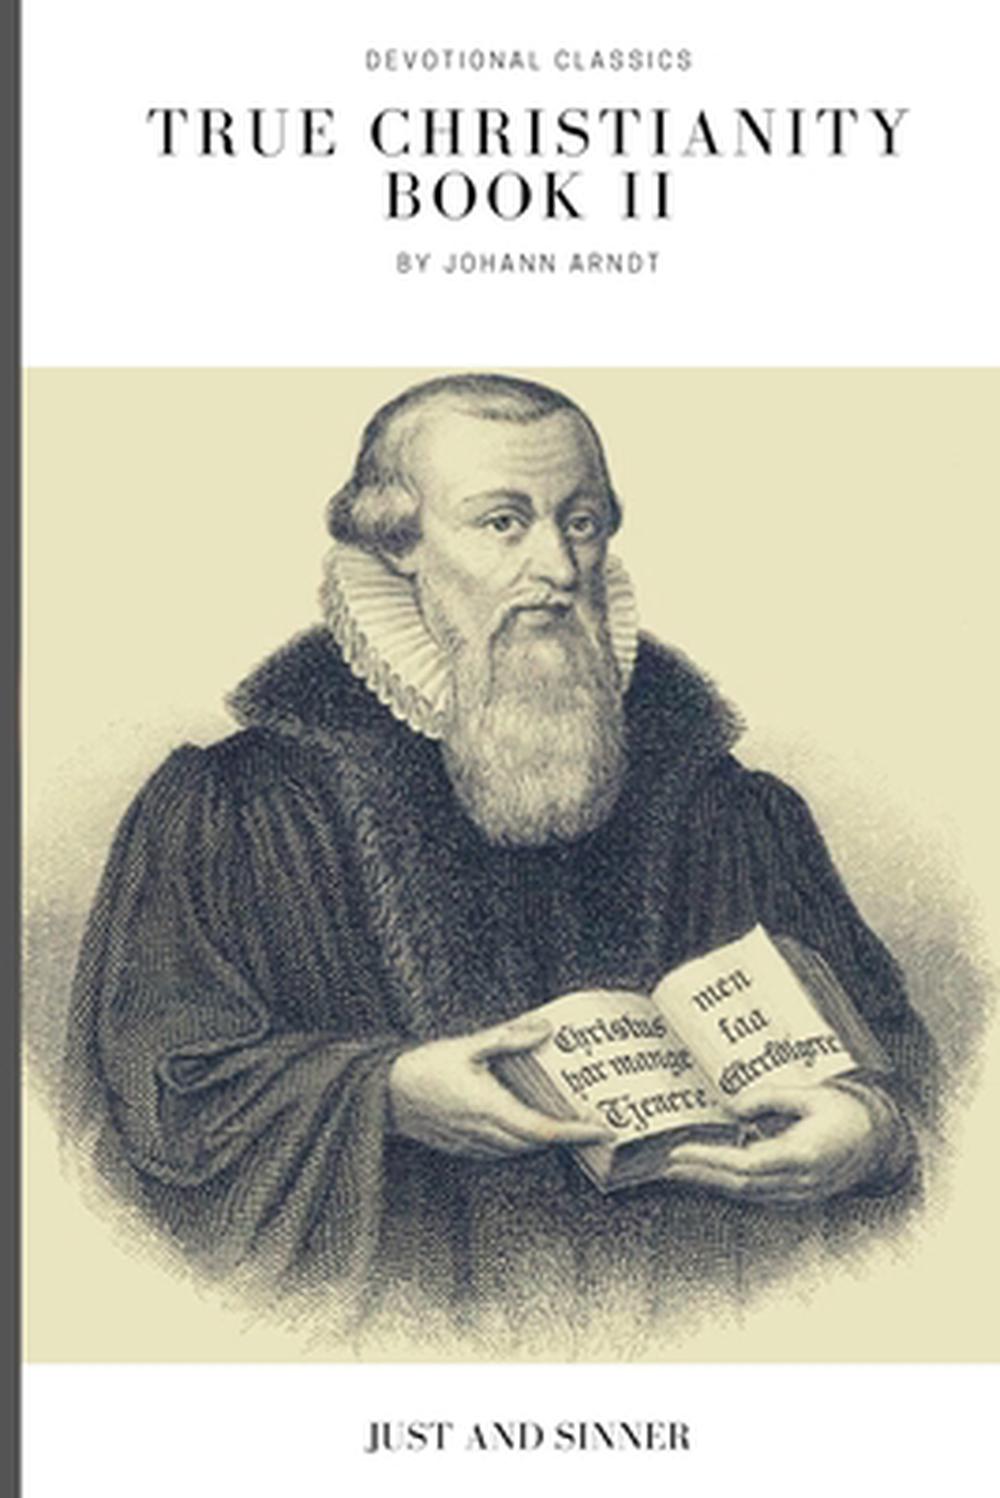 True Christianity Book II by Johann Arndt (English) Paperback Book